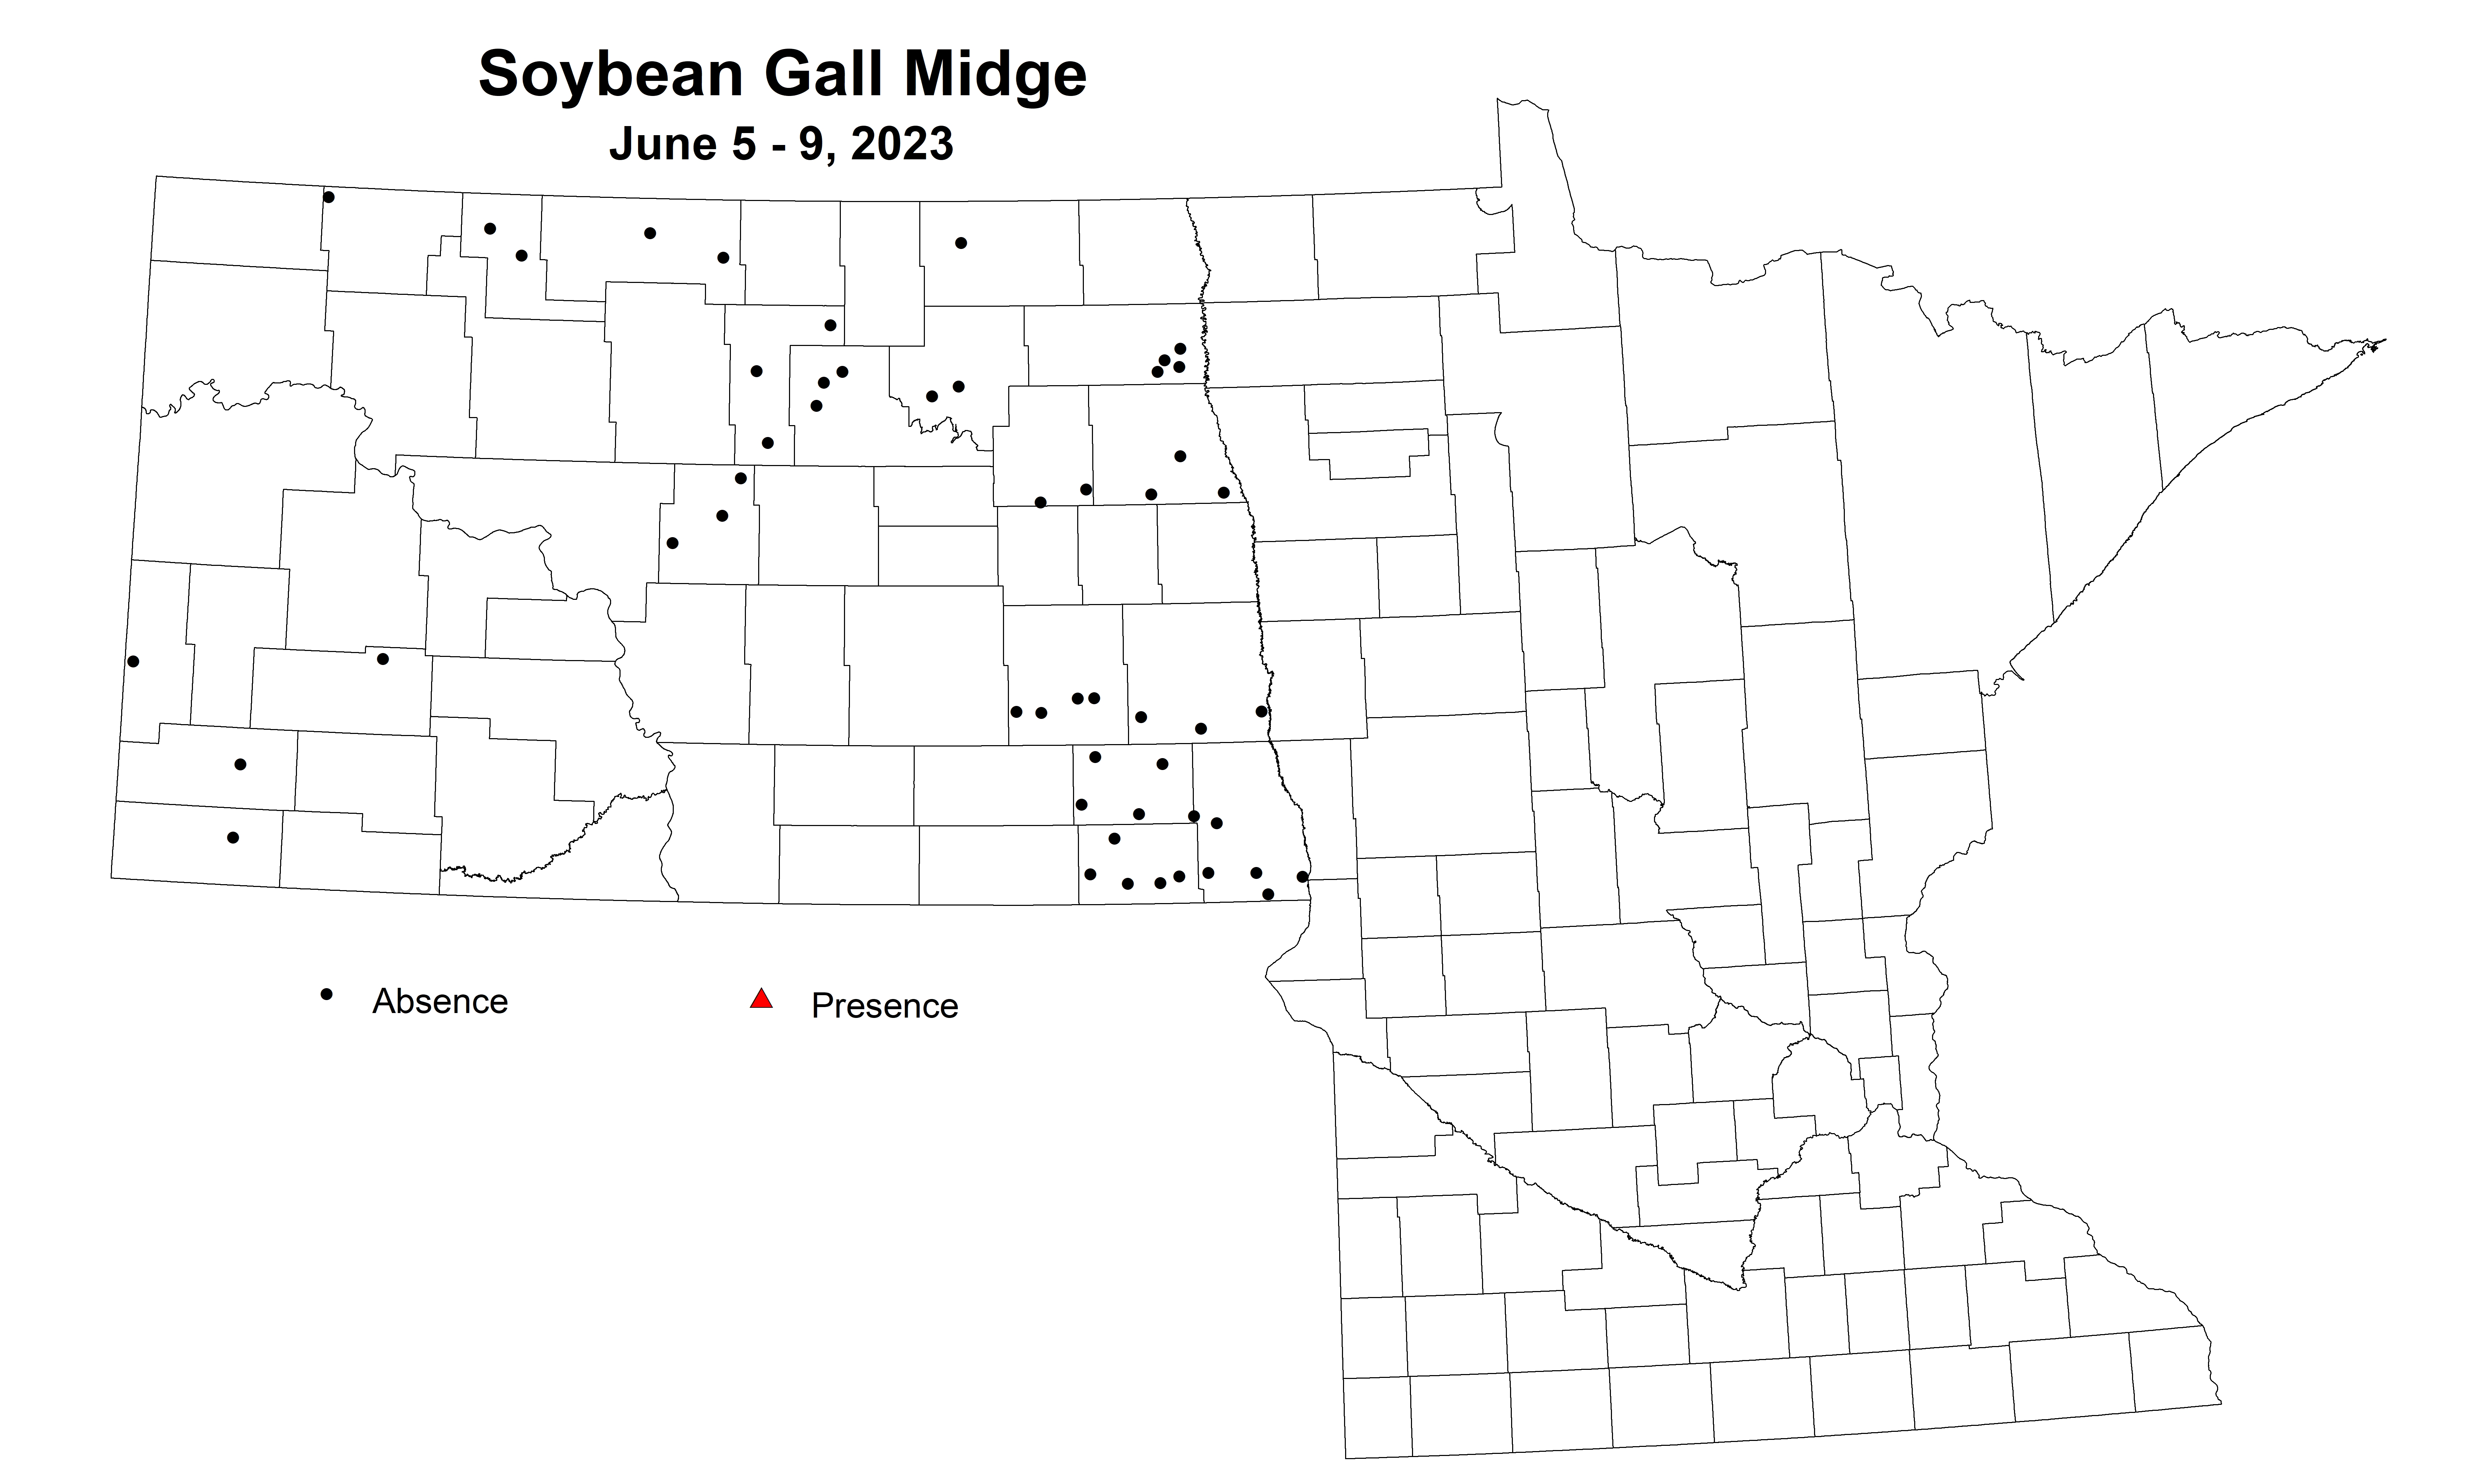 soybean gall midge June 5-9 2023